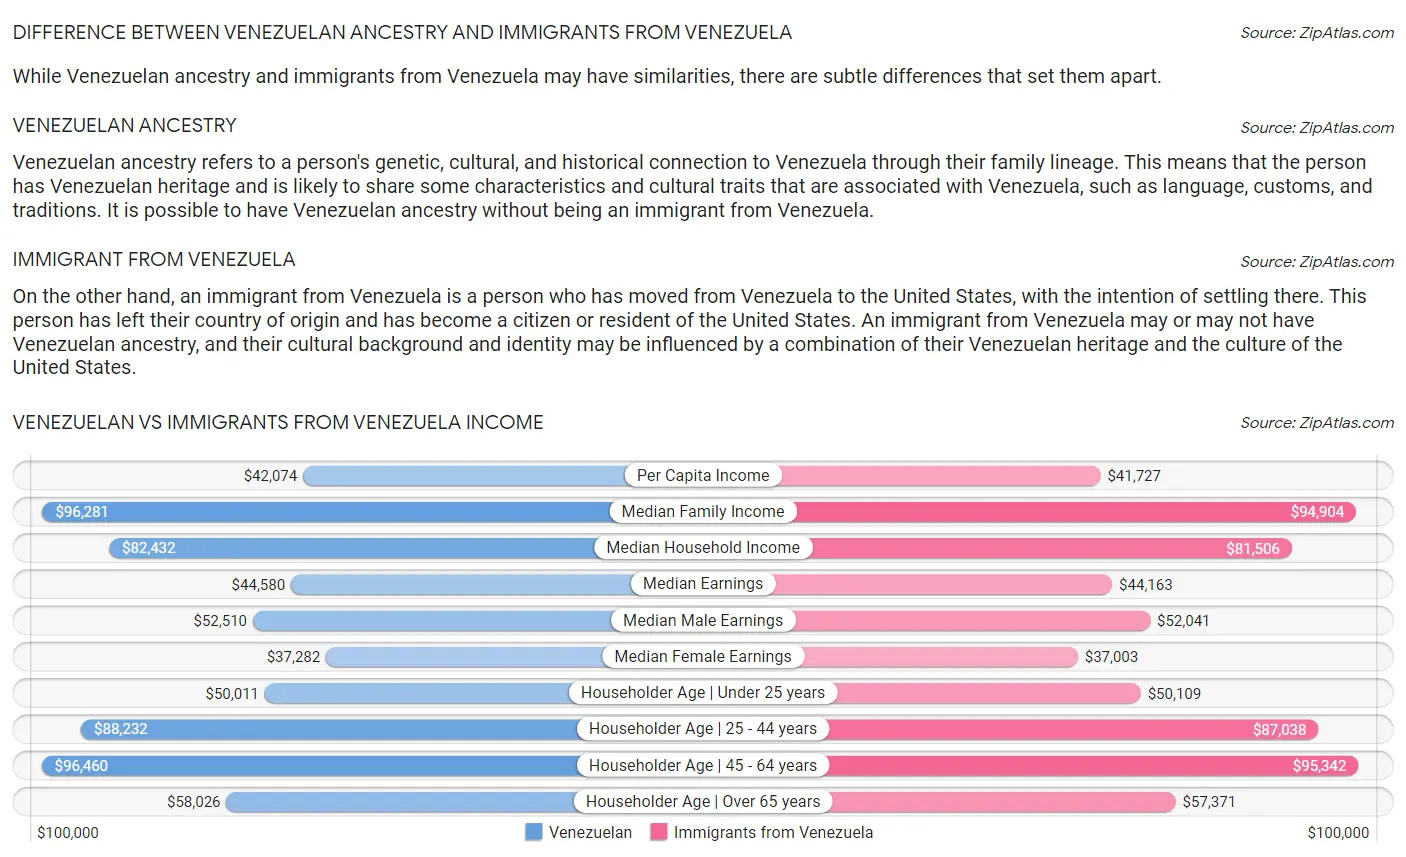 Venezuelan vs Immigrants from Venezuela Income